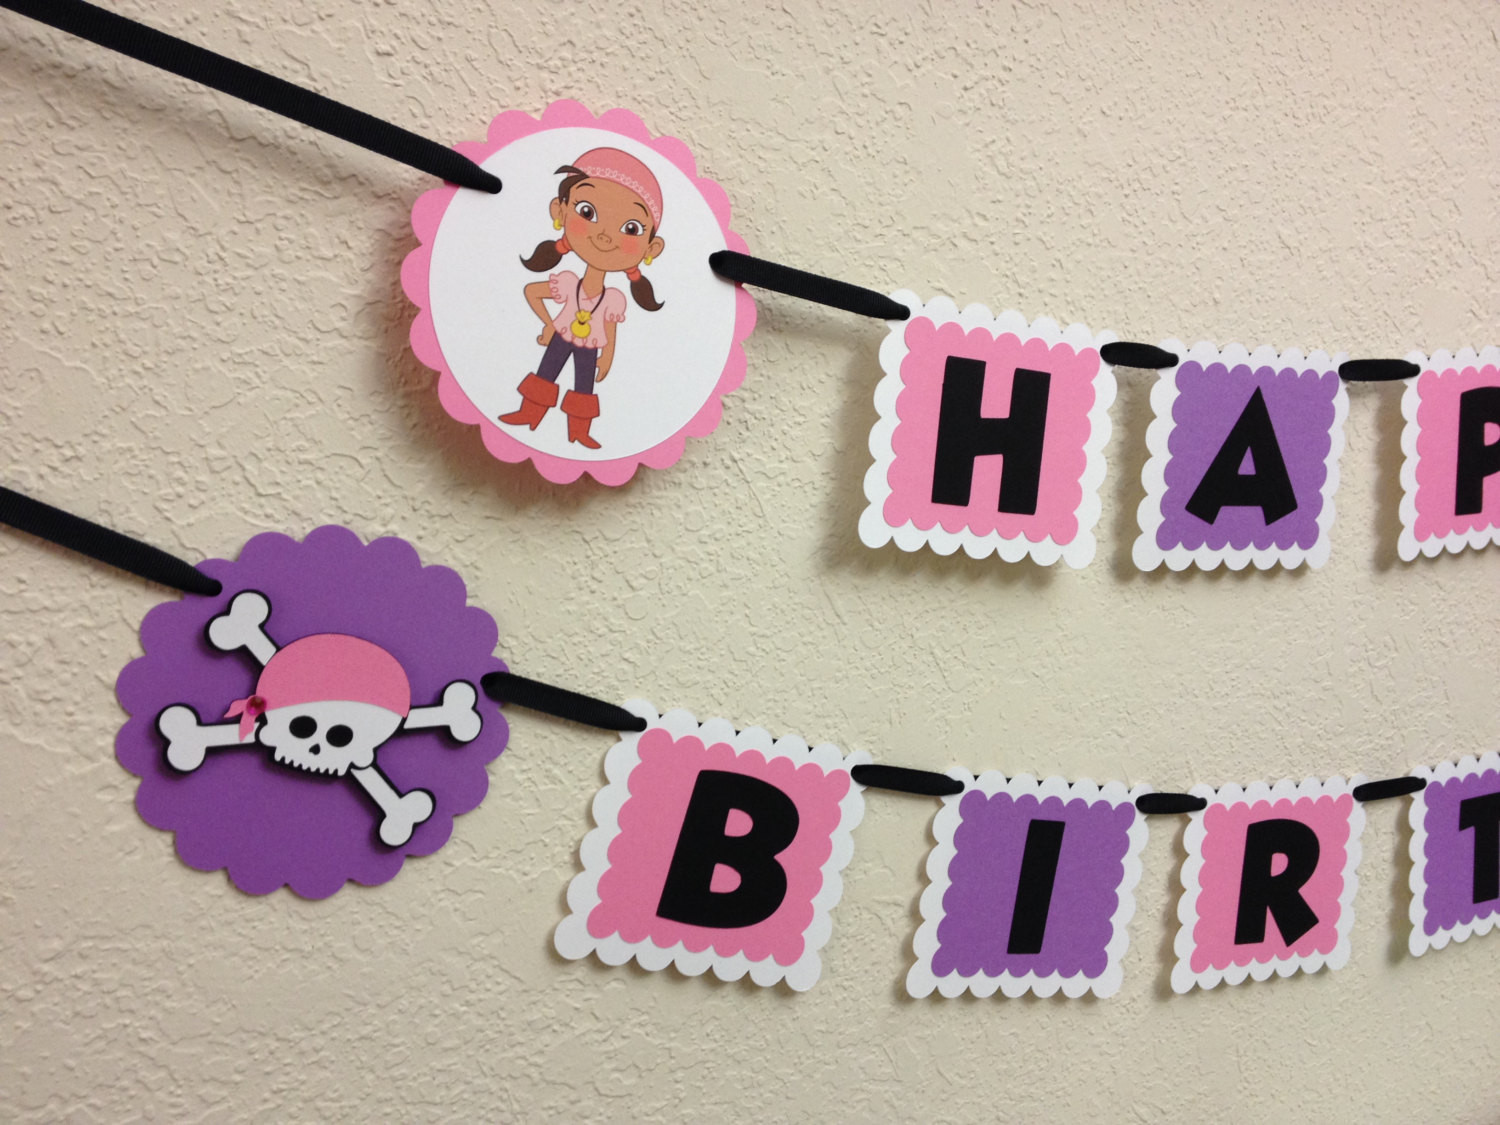 Izzy Birthday Party Supplies
 Girls Pirate Party Birthday Banner Izzy Happy Birthday